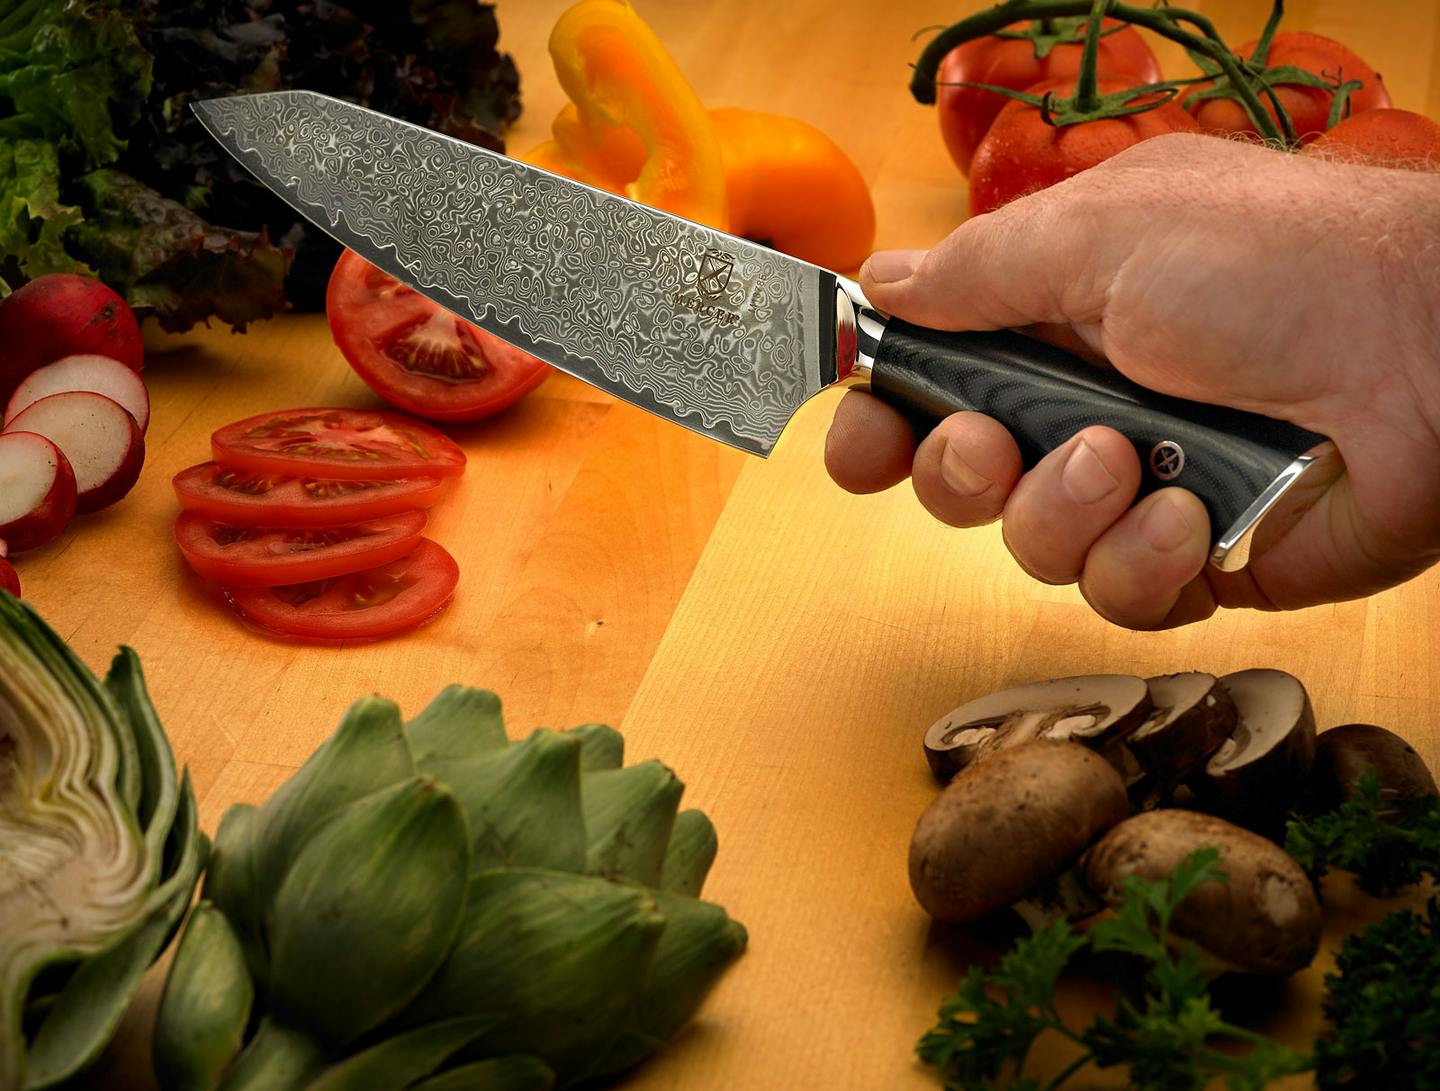 Mercer Culinary Premium Grade Super Steel, 8" Chef's Knife, G10 Handle